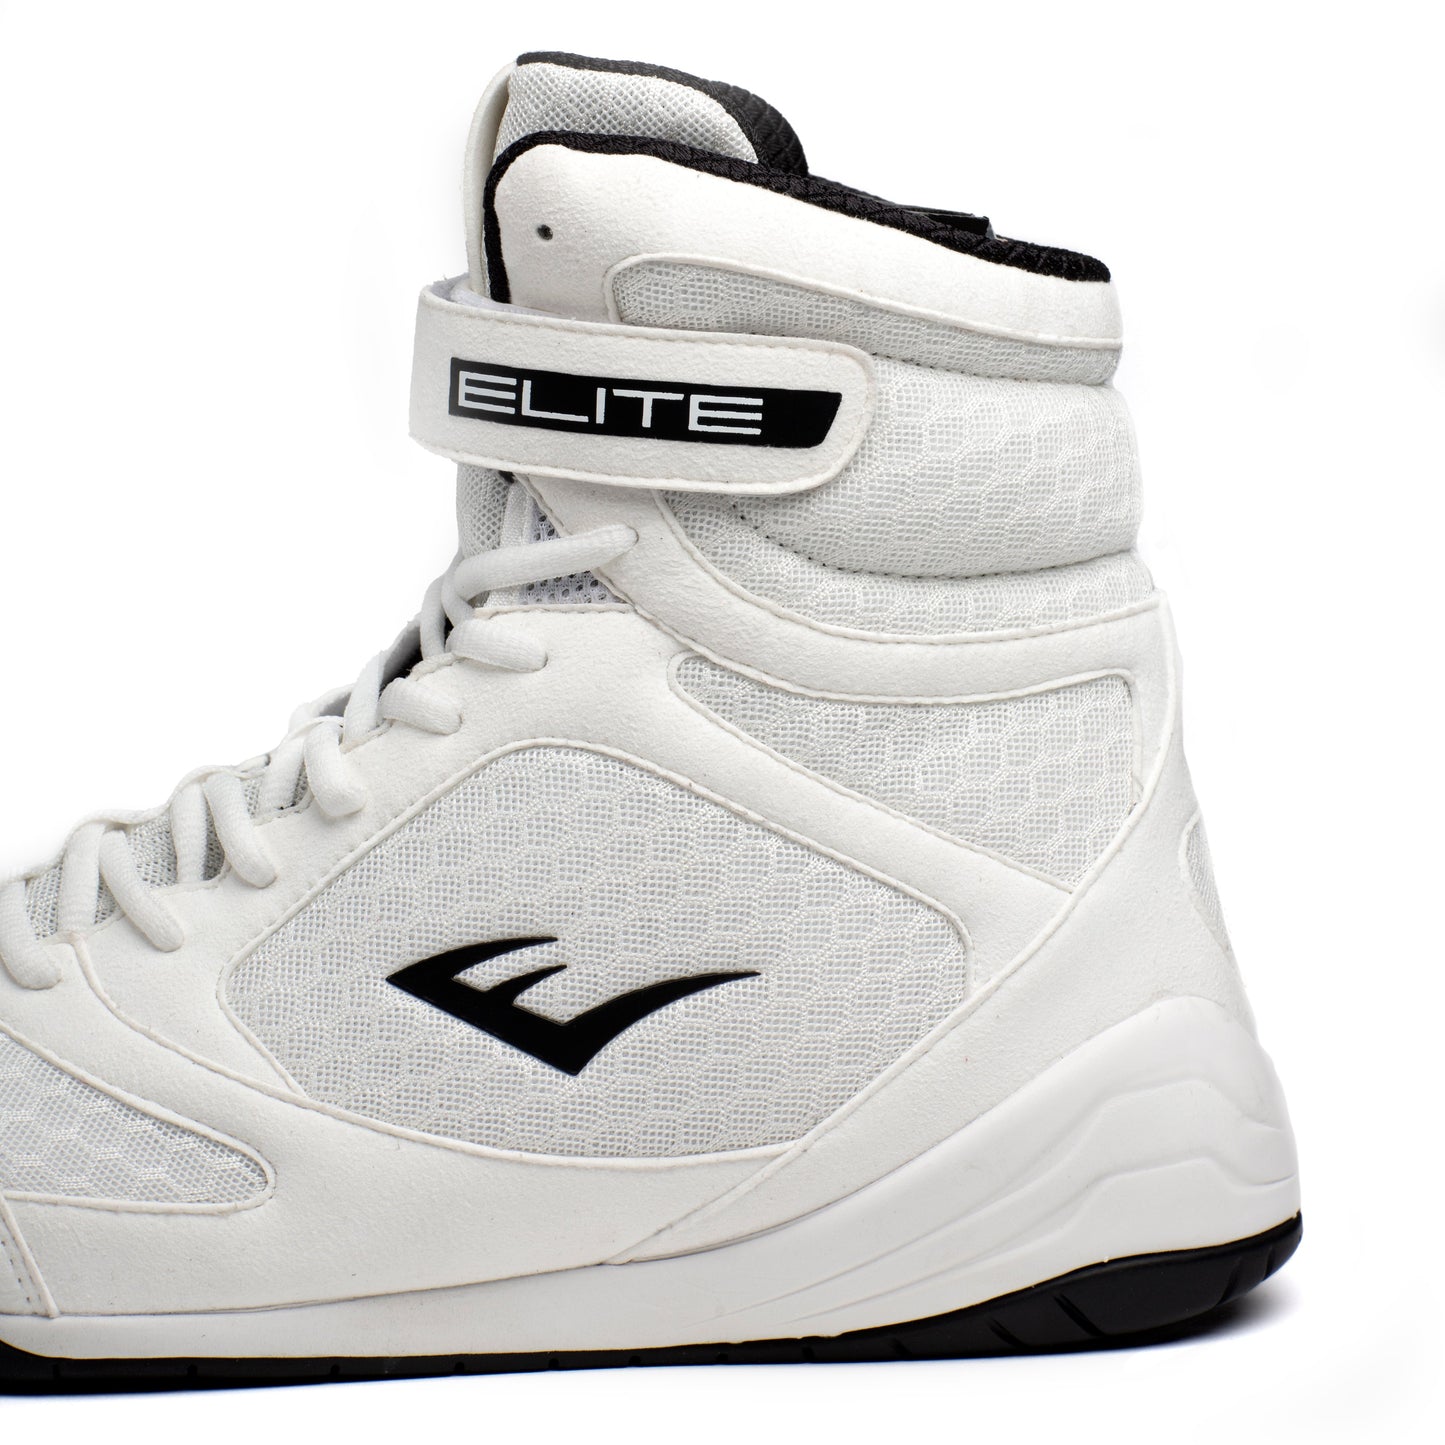 Elite 2 Boxing Shoes